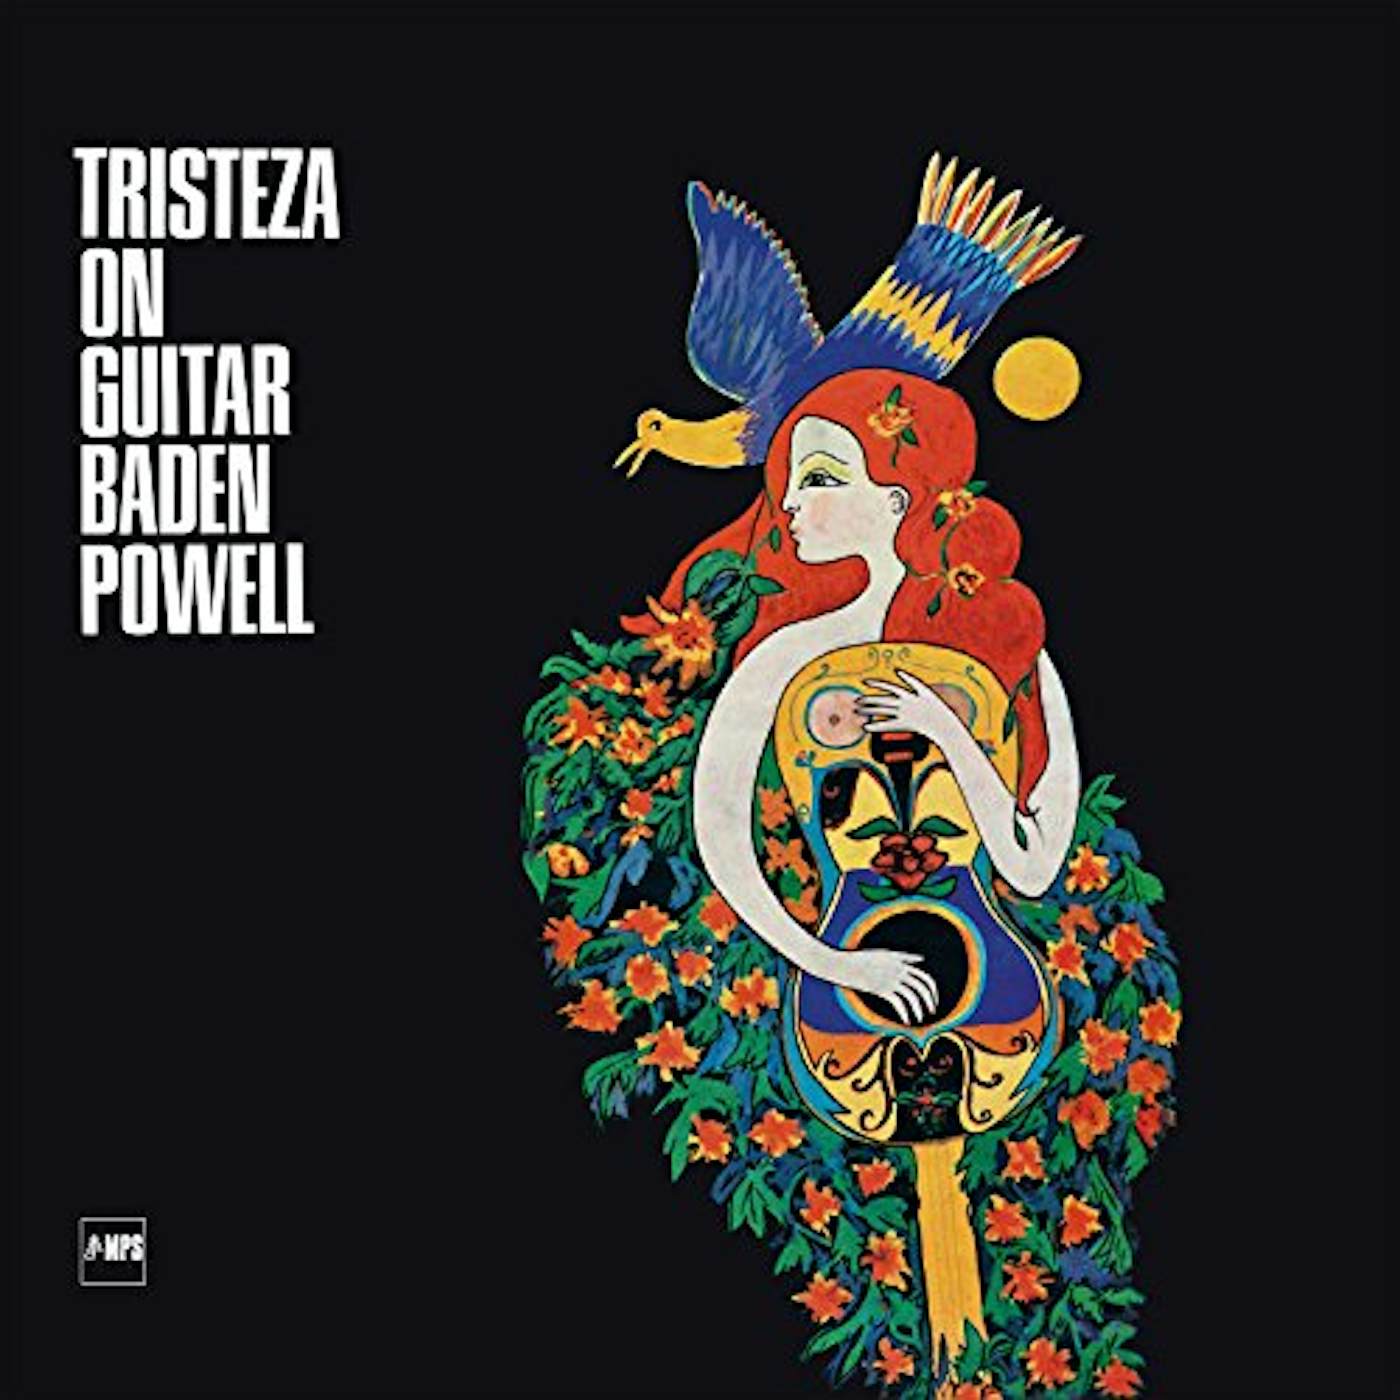 Baden Powell Tristeza on Guitar Vinyl Record